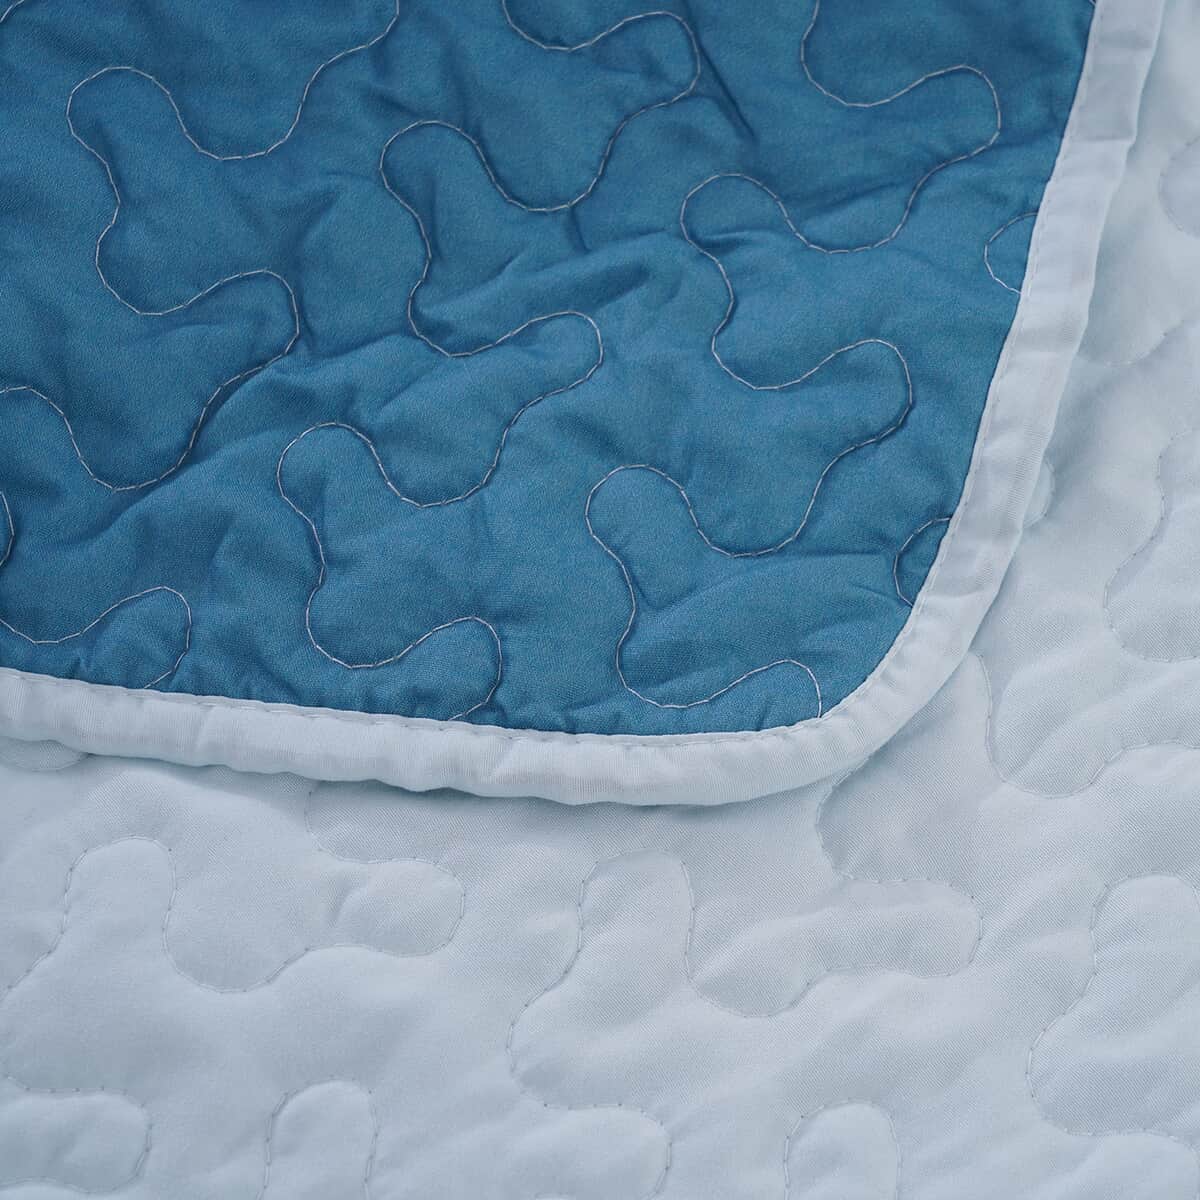 HOMESMART Teal Garden Digital Print 100% Microfiber Quilted Bedspread and 2 Pillow Shams - King image number 4